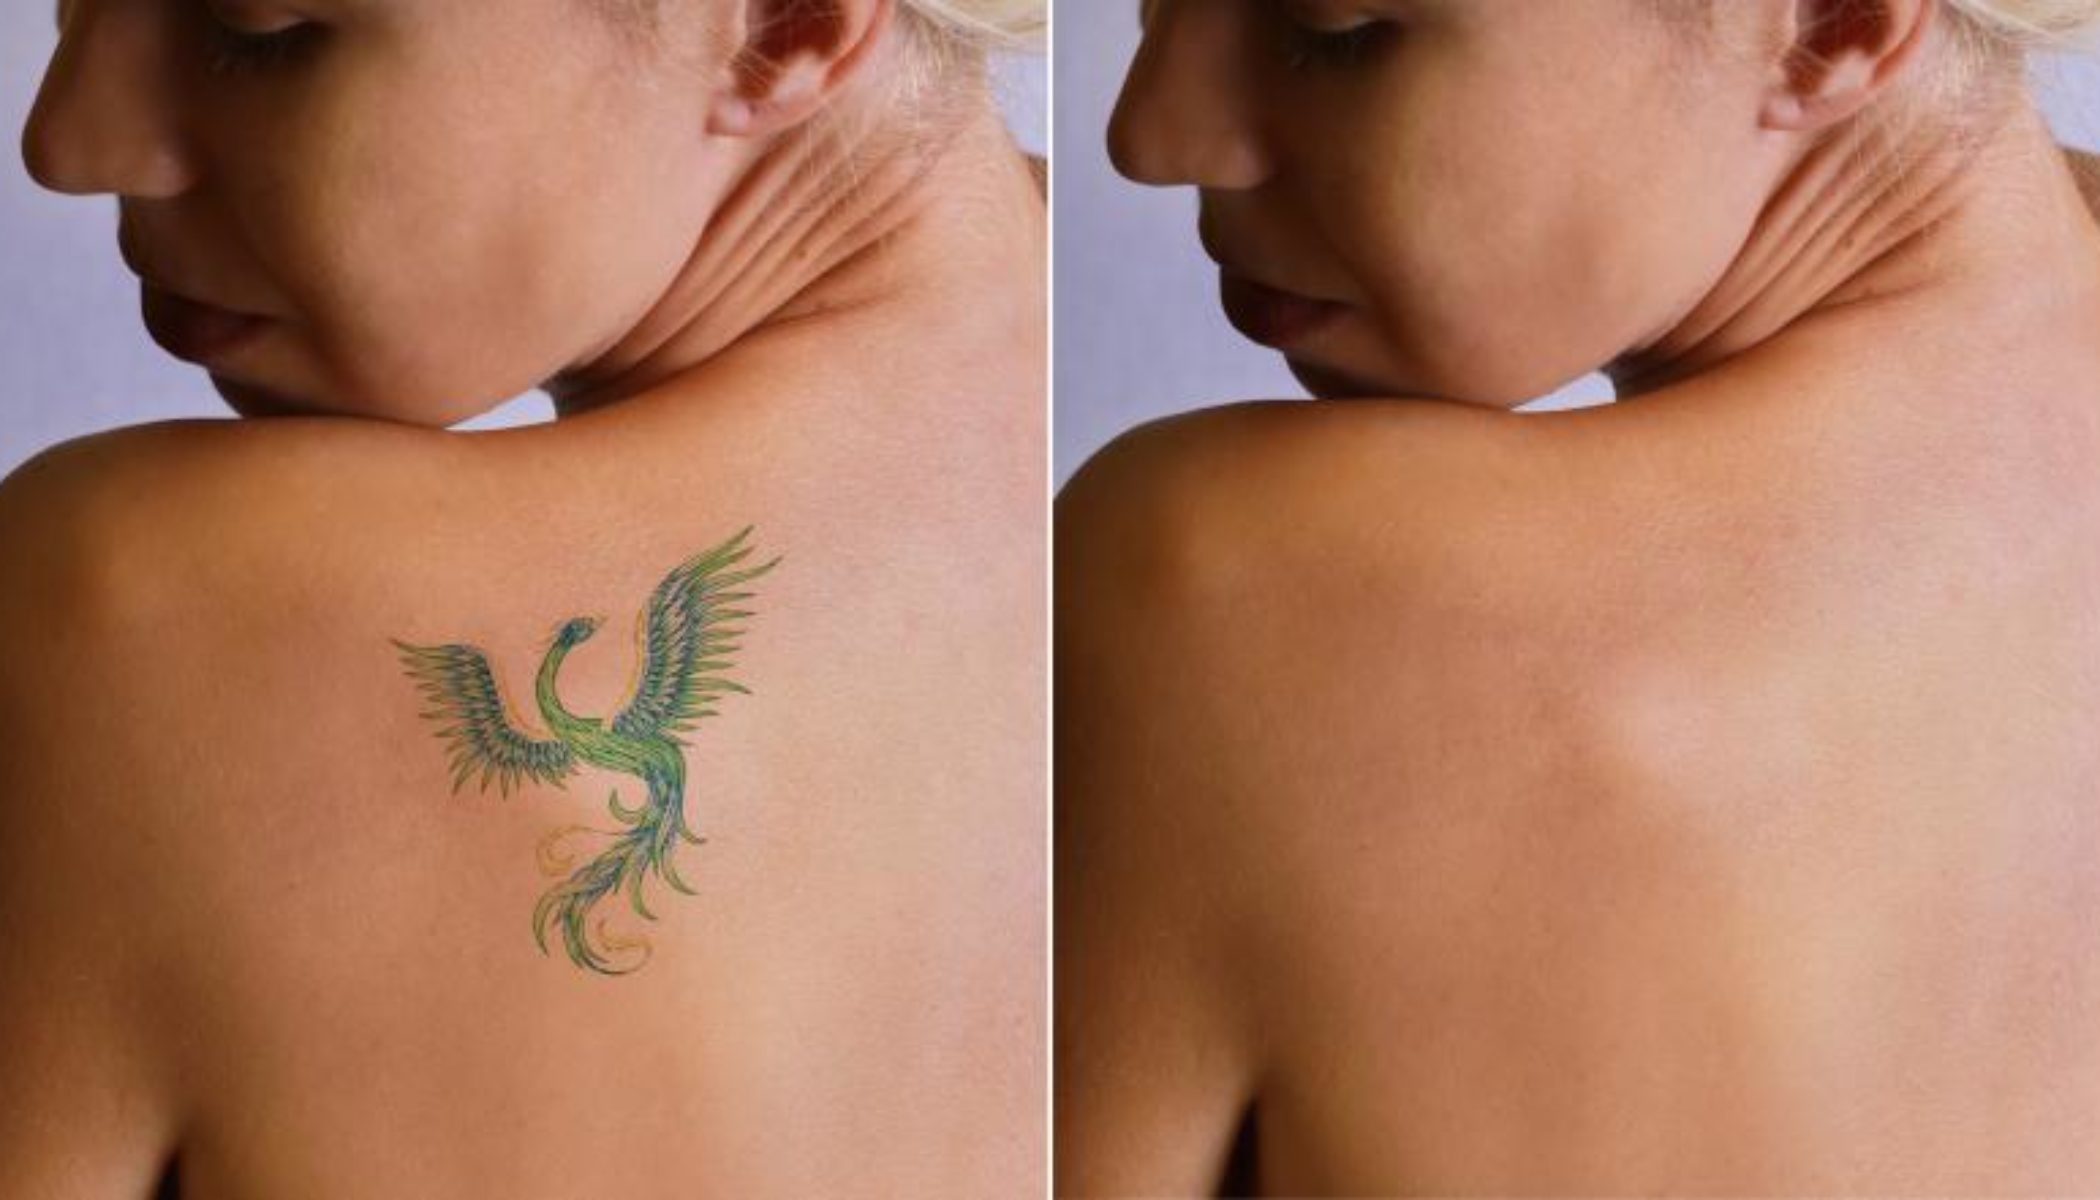 Laser Tattoo Removal Procedure Description | MyMediTravel Knowledge